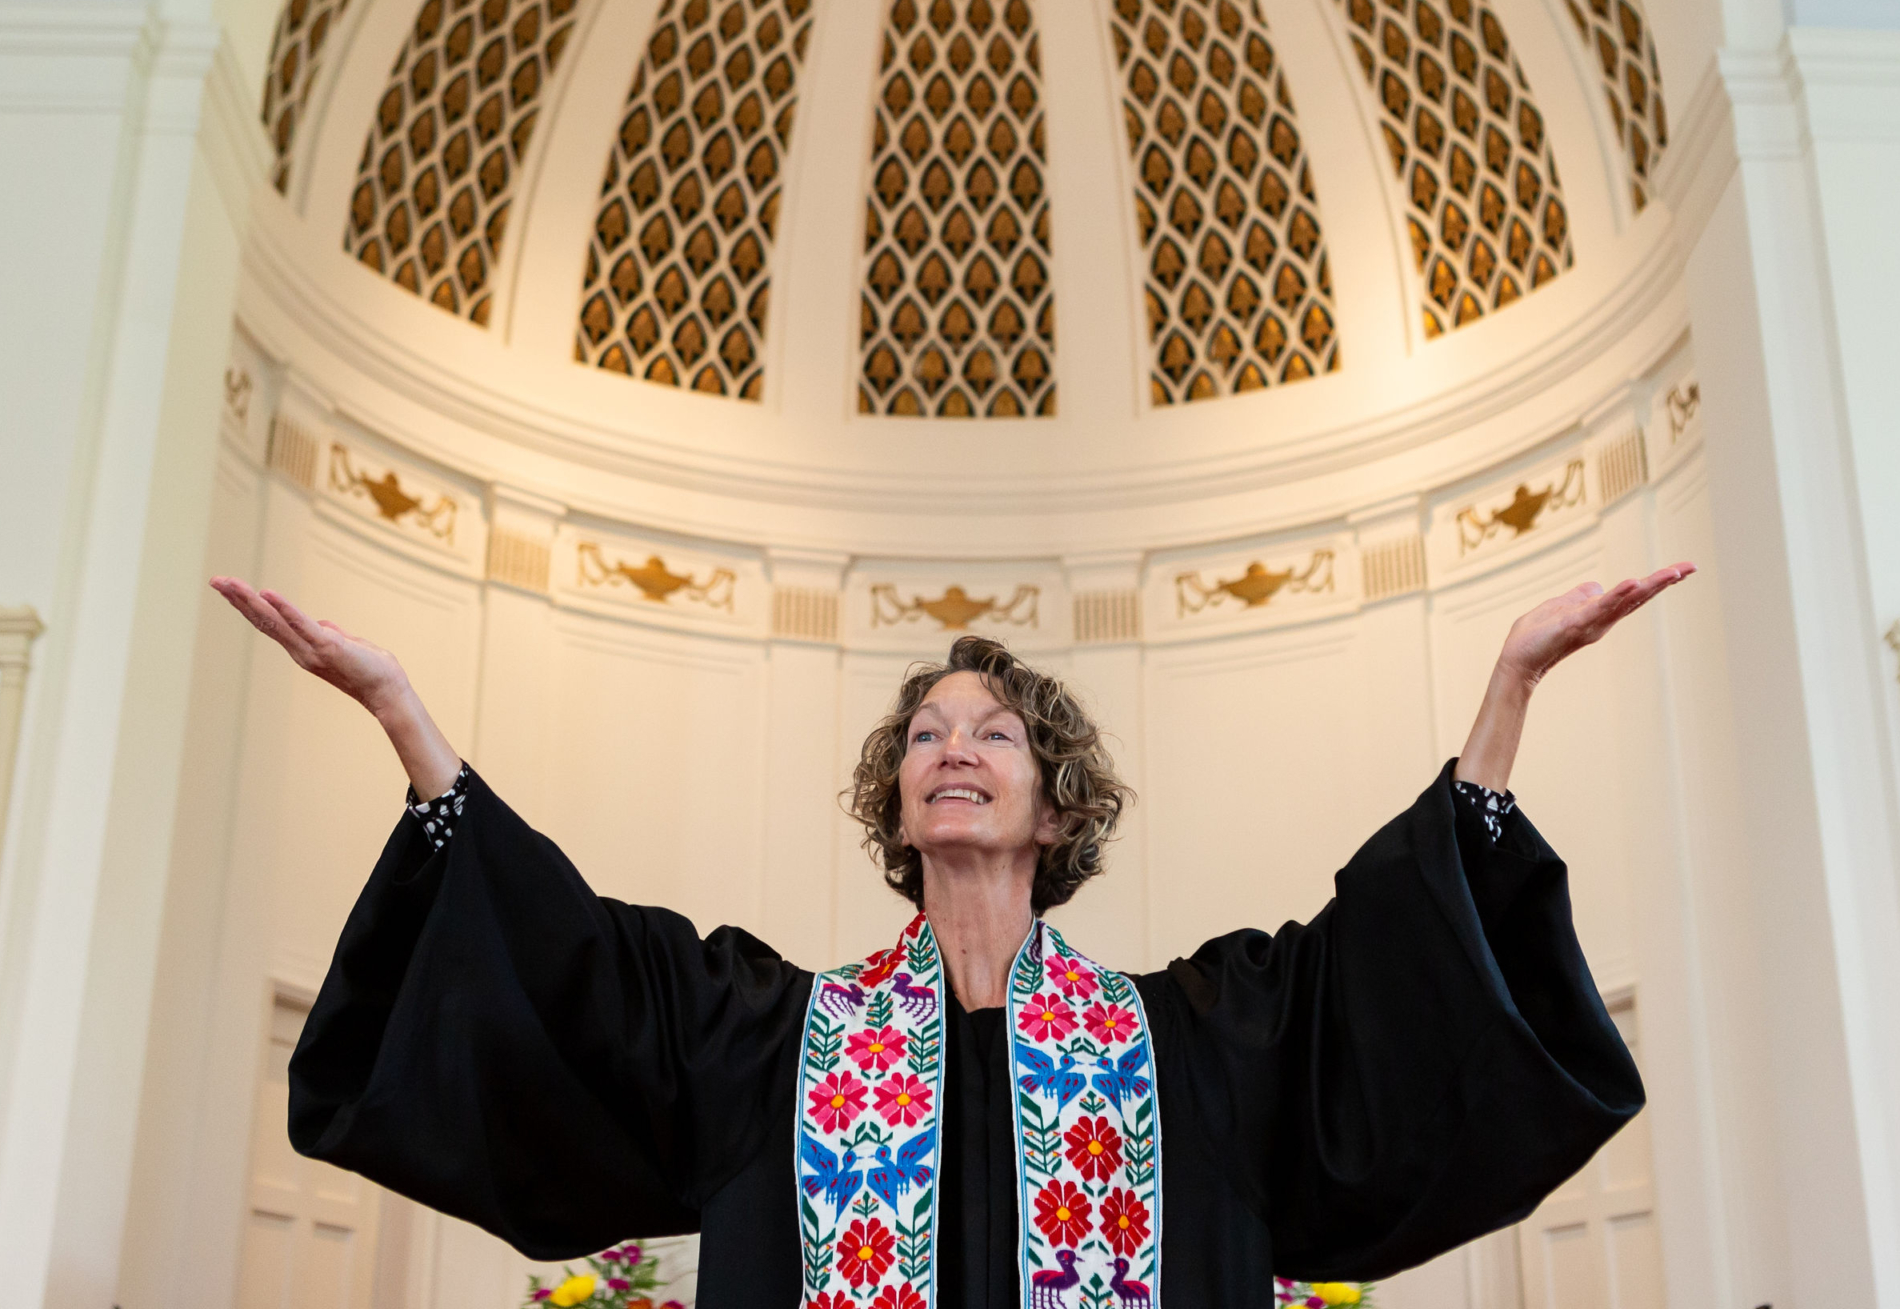 Associate Pastor Dorothy Boulton raises her arms during worship.